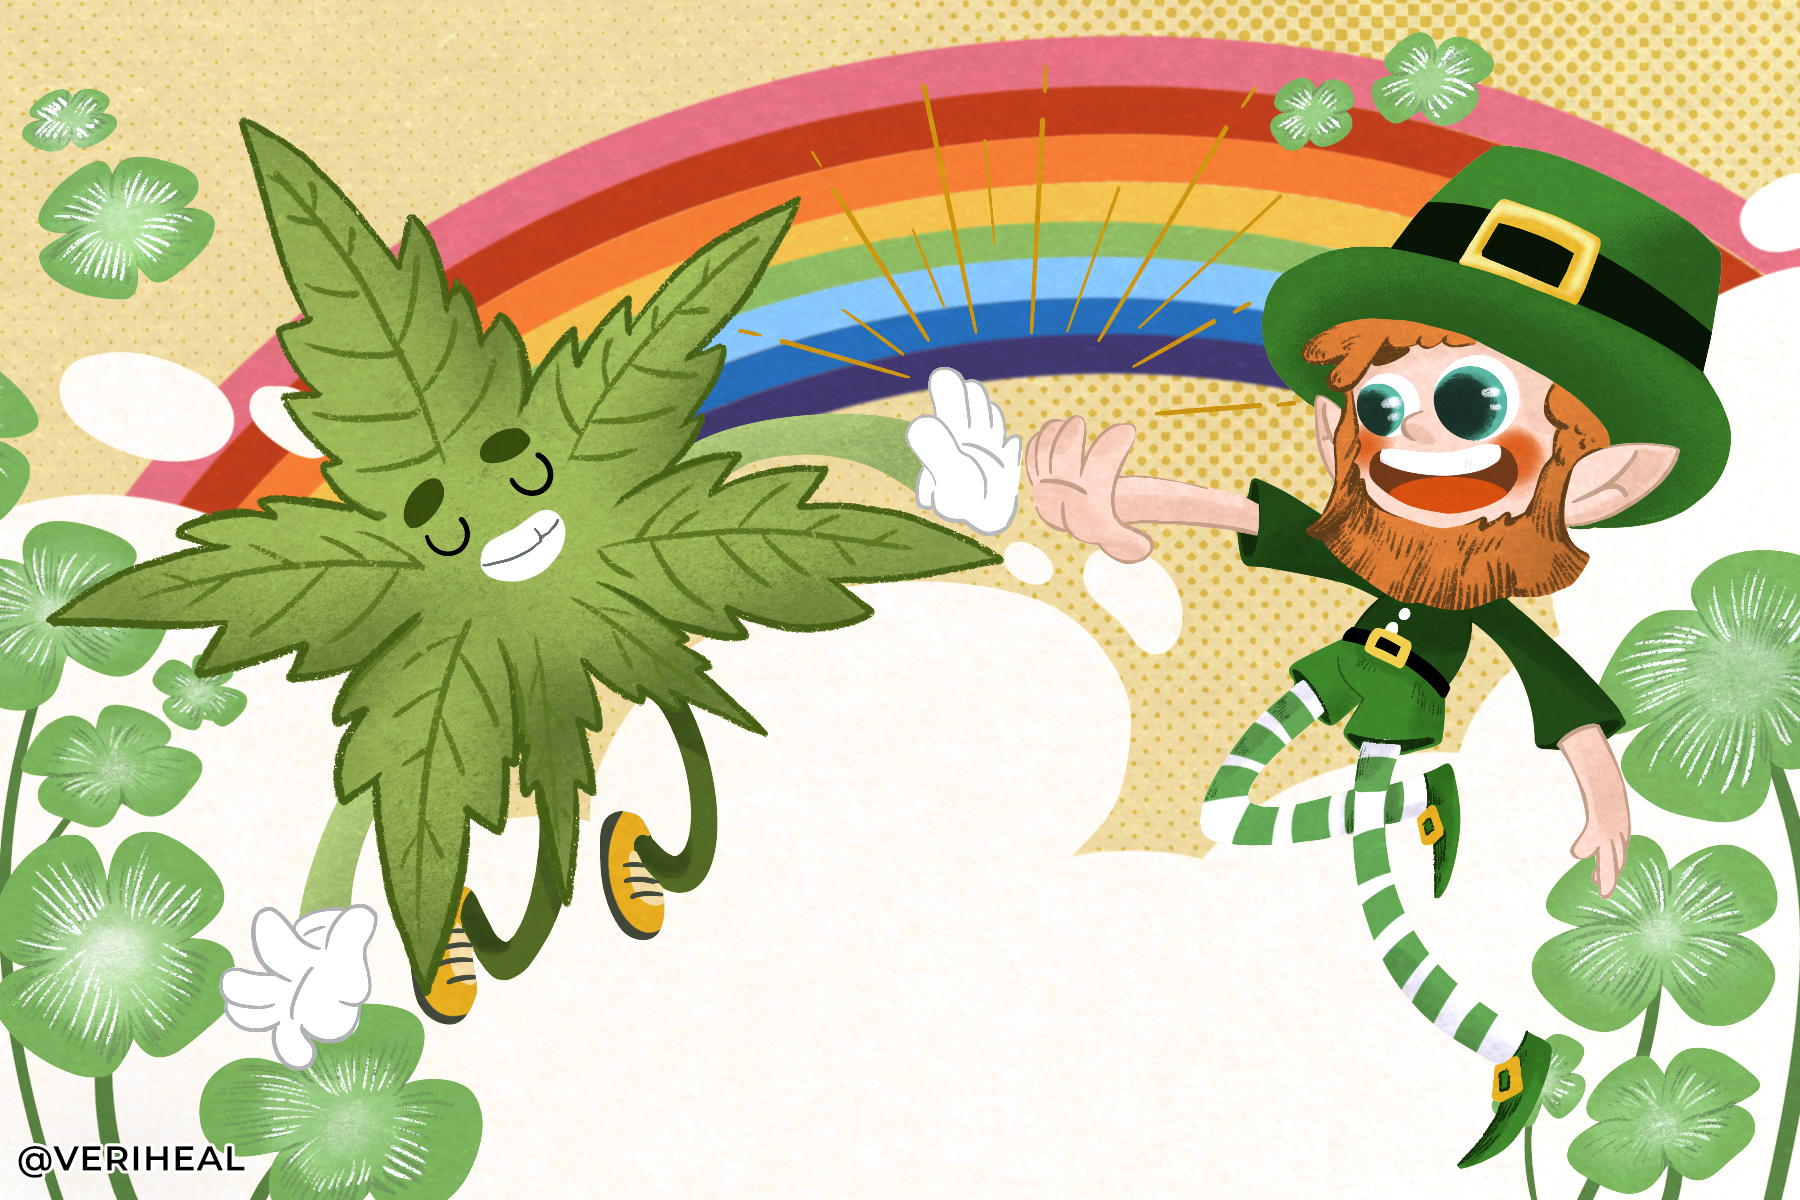 Recreational Cannabis in Ireland Is Making Progress